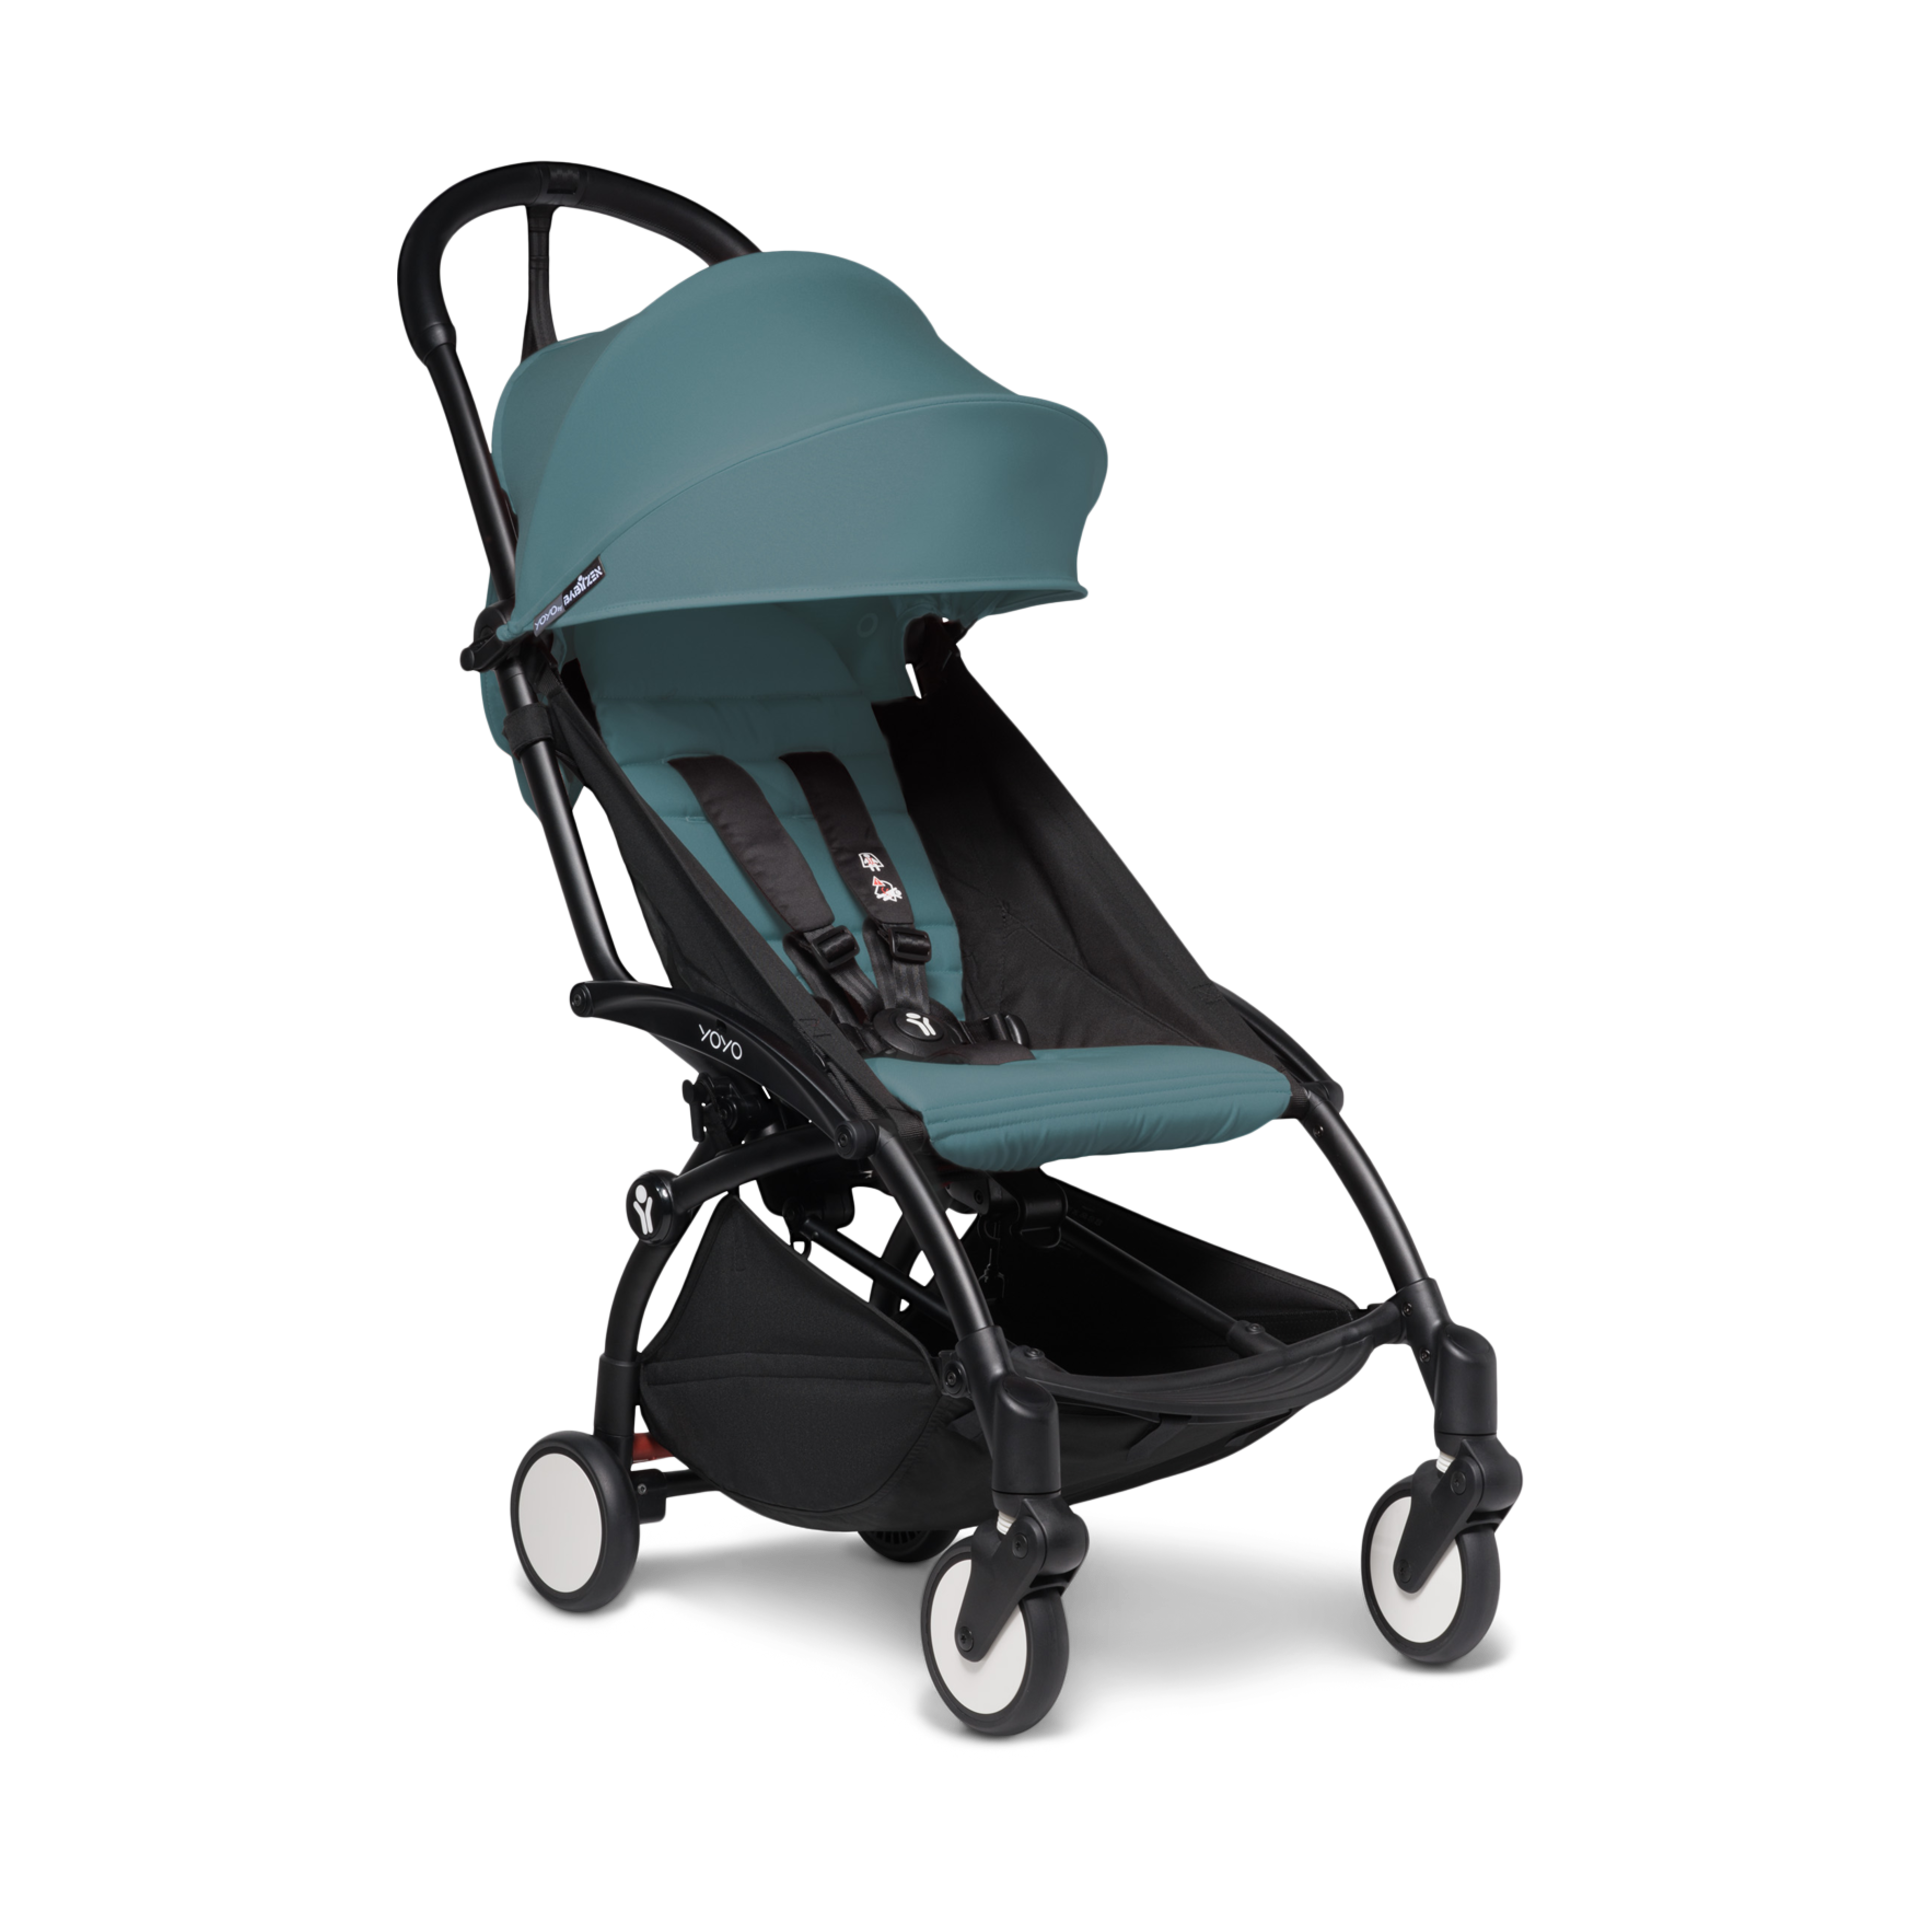 lightest infant stroller